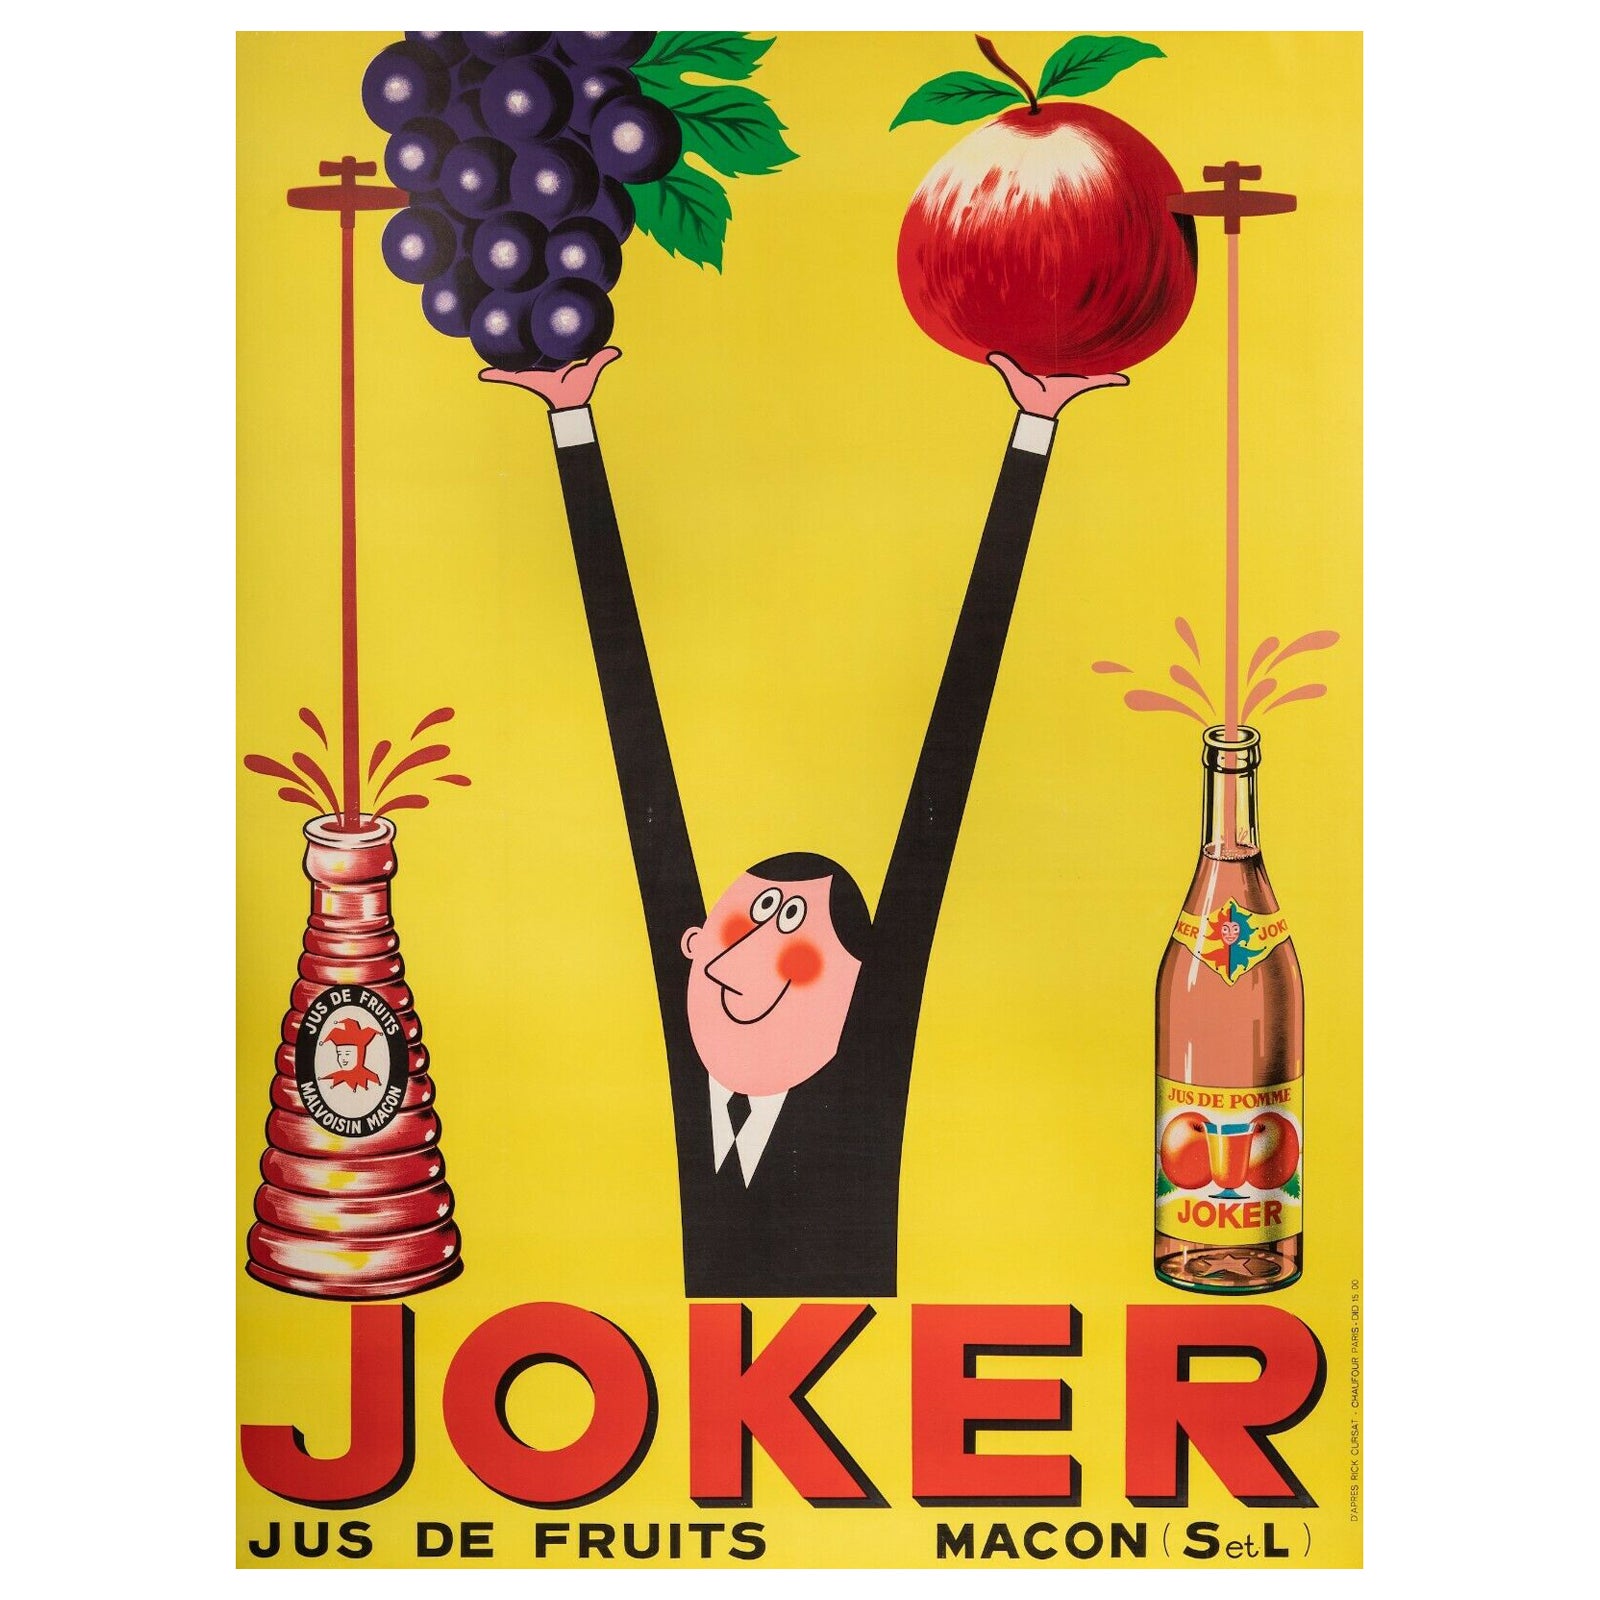 Original Joker Jus Poster-Rick Cursat-Fruit Apple Grapes Mâcon, 1955